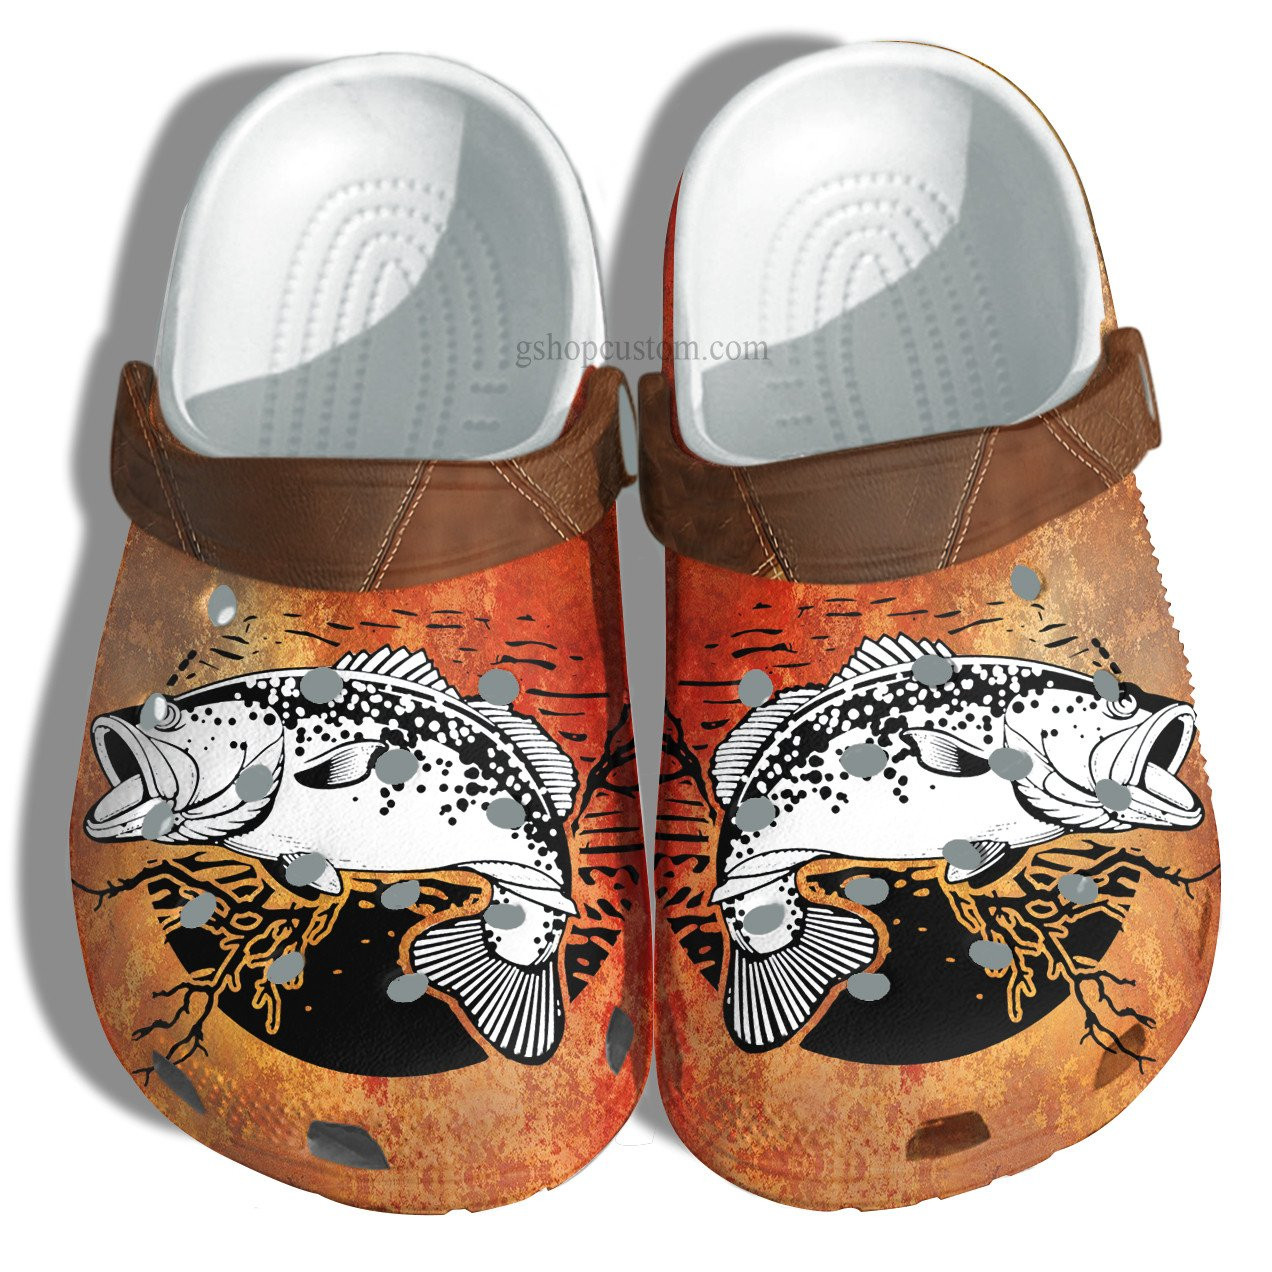 Fishing Vintage Crocs Shoes Gift Husband Grandpa - Fishing Orange Leather Shoes Croc Clogs